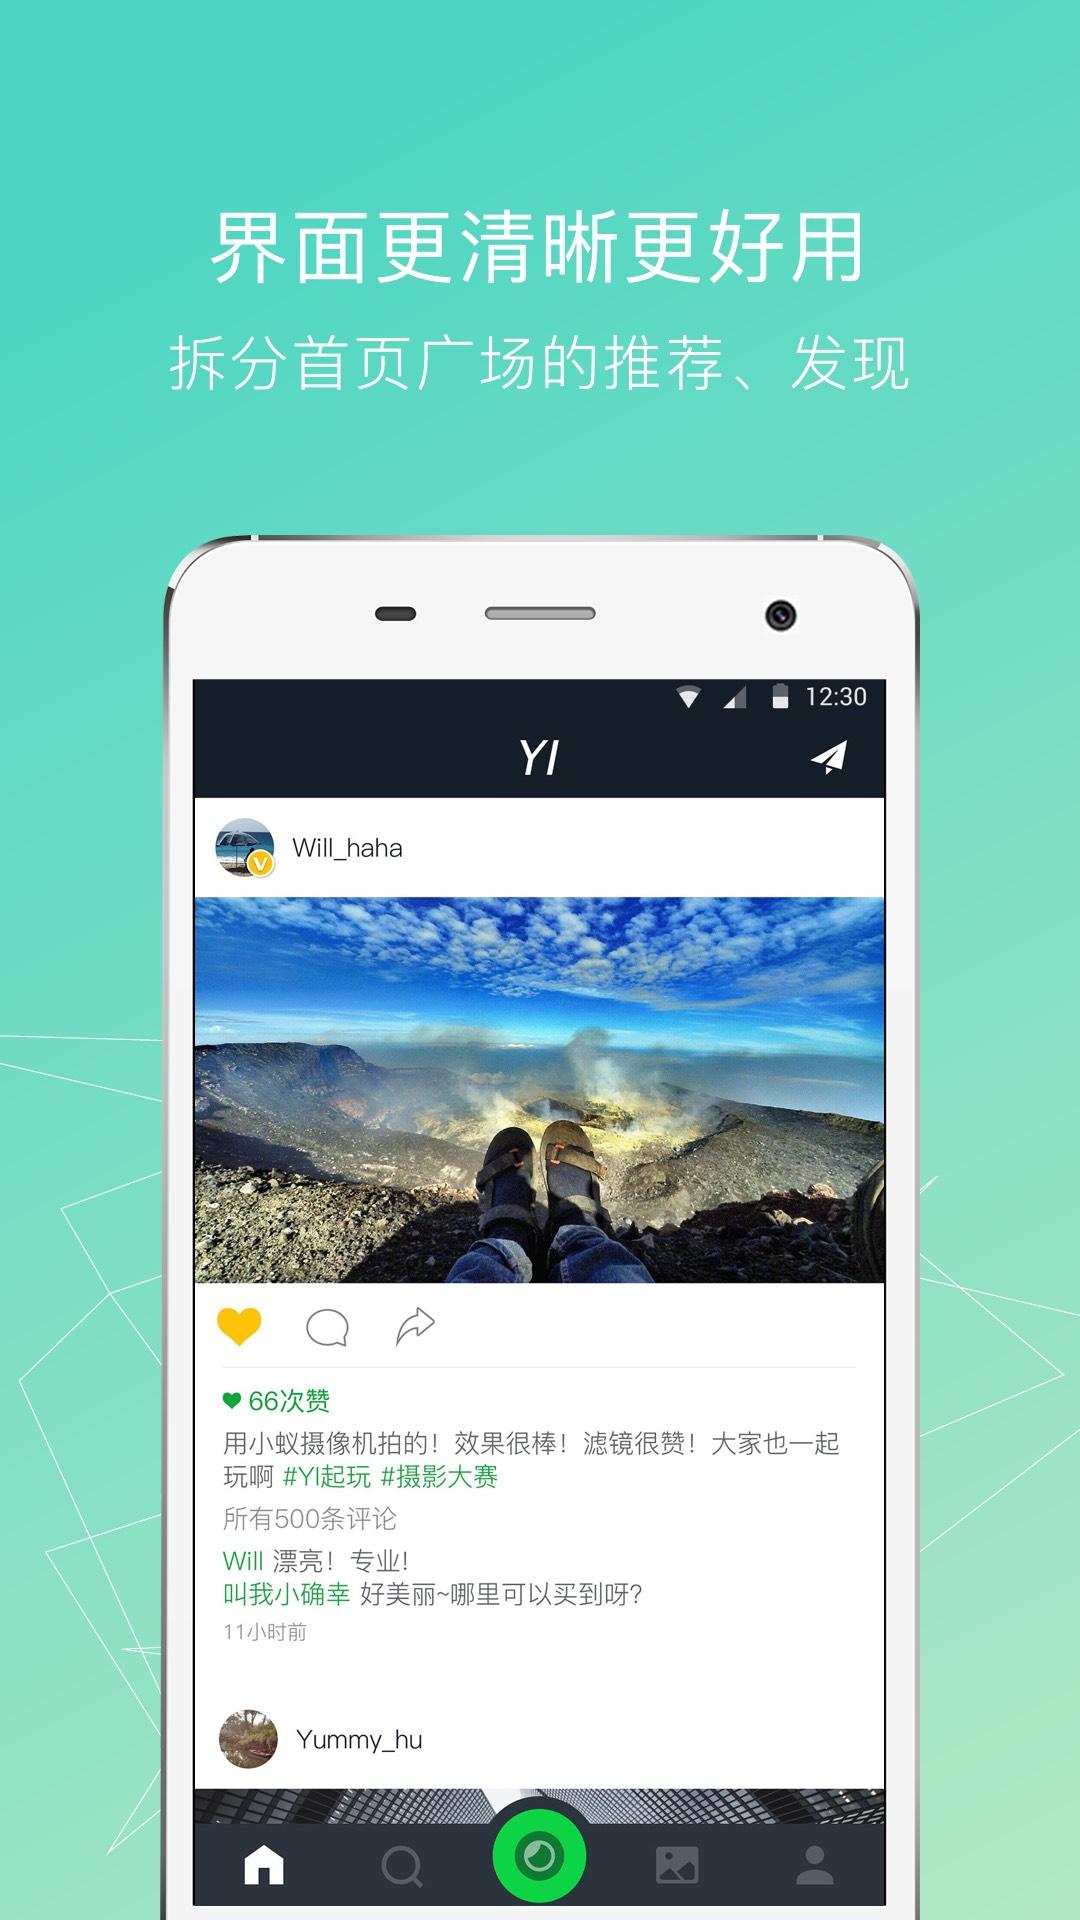 Android application YI Action - YI Action Camera screenshort